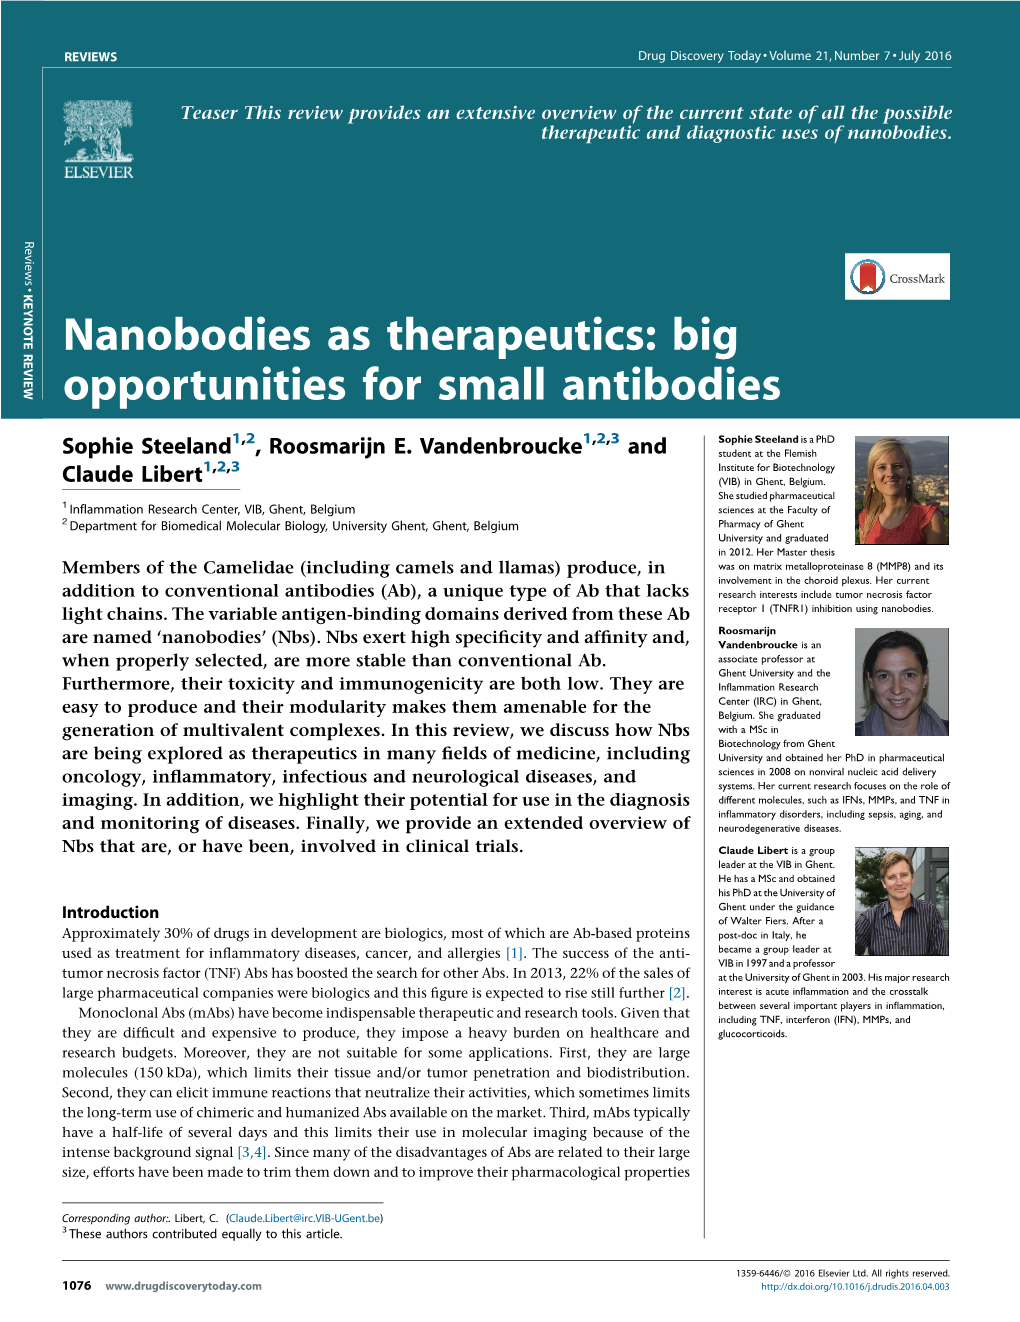 Nanobodies As Therapeutics: Big Opportunities for Small Antibodies